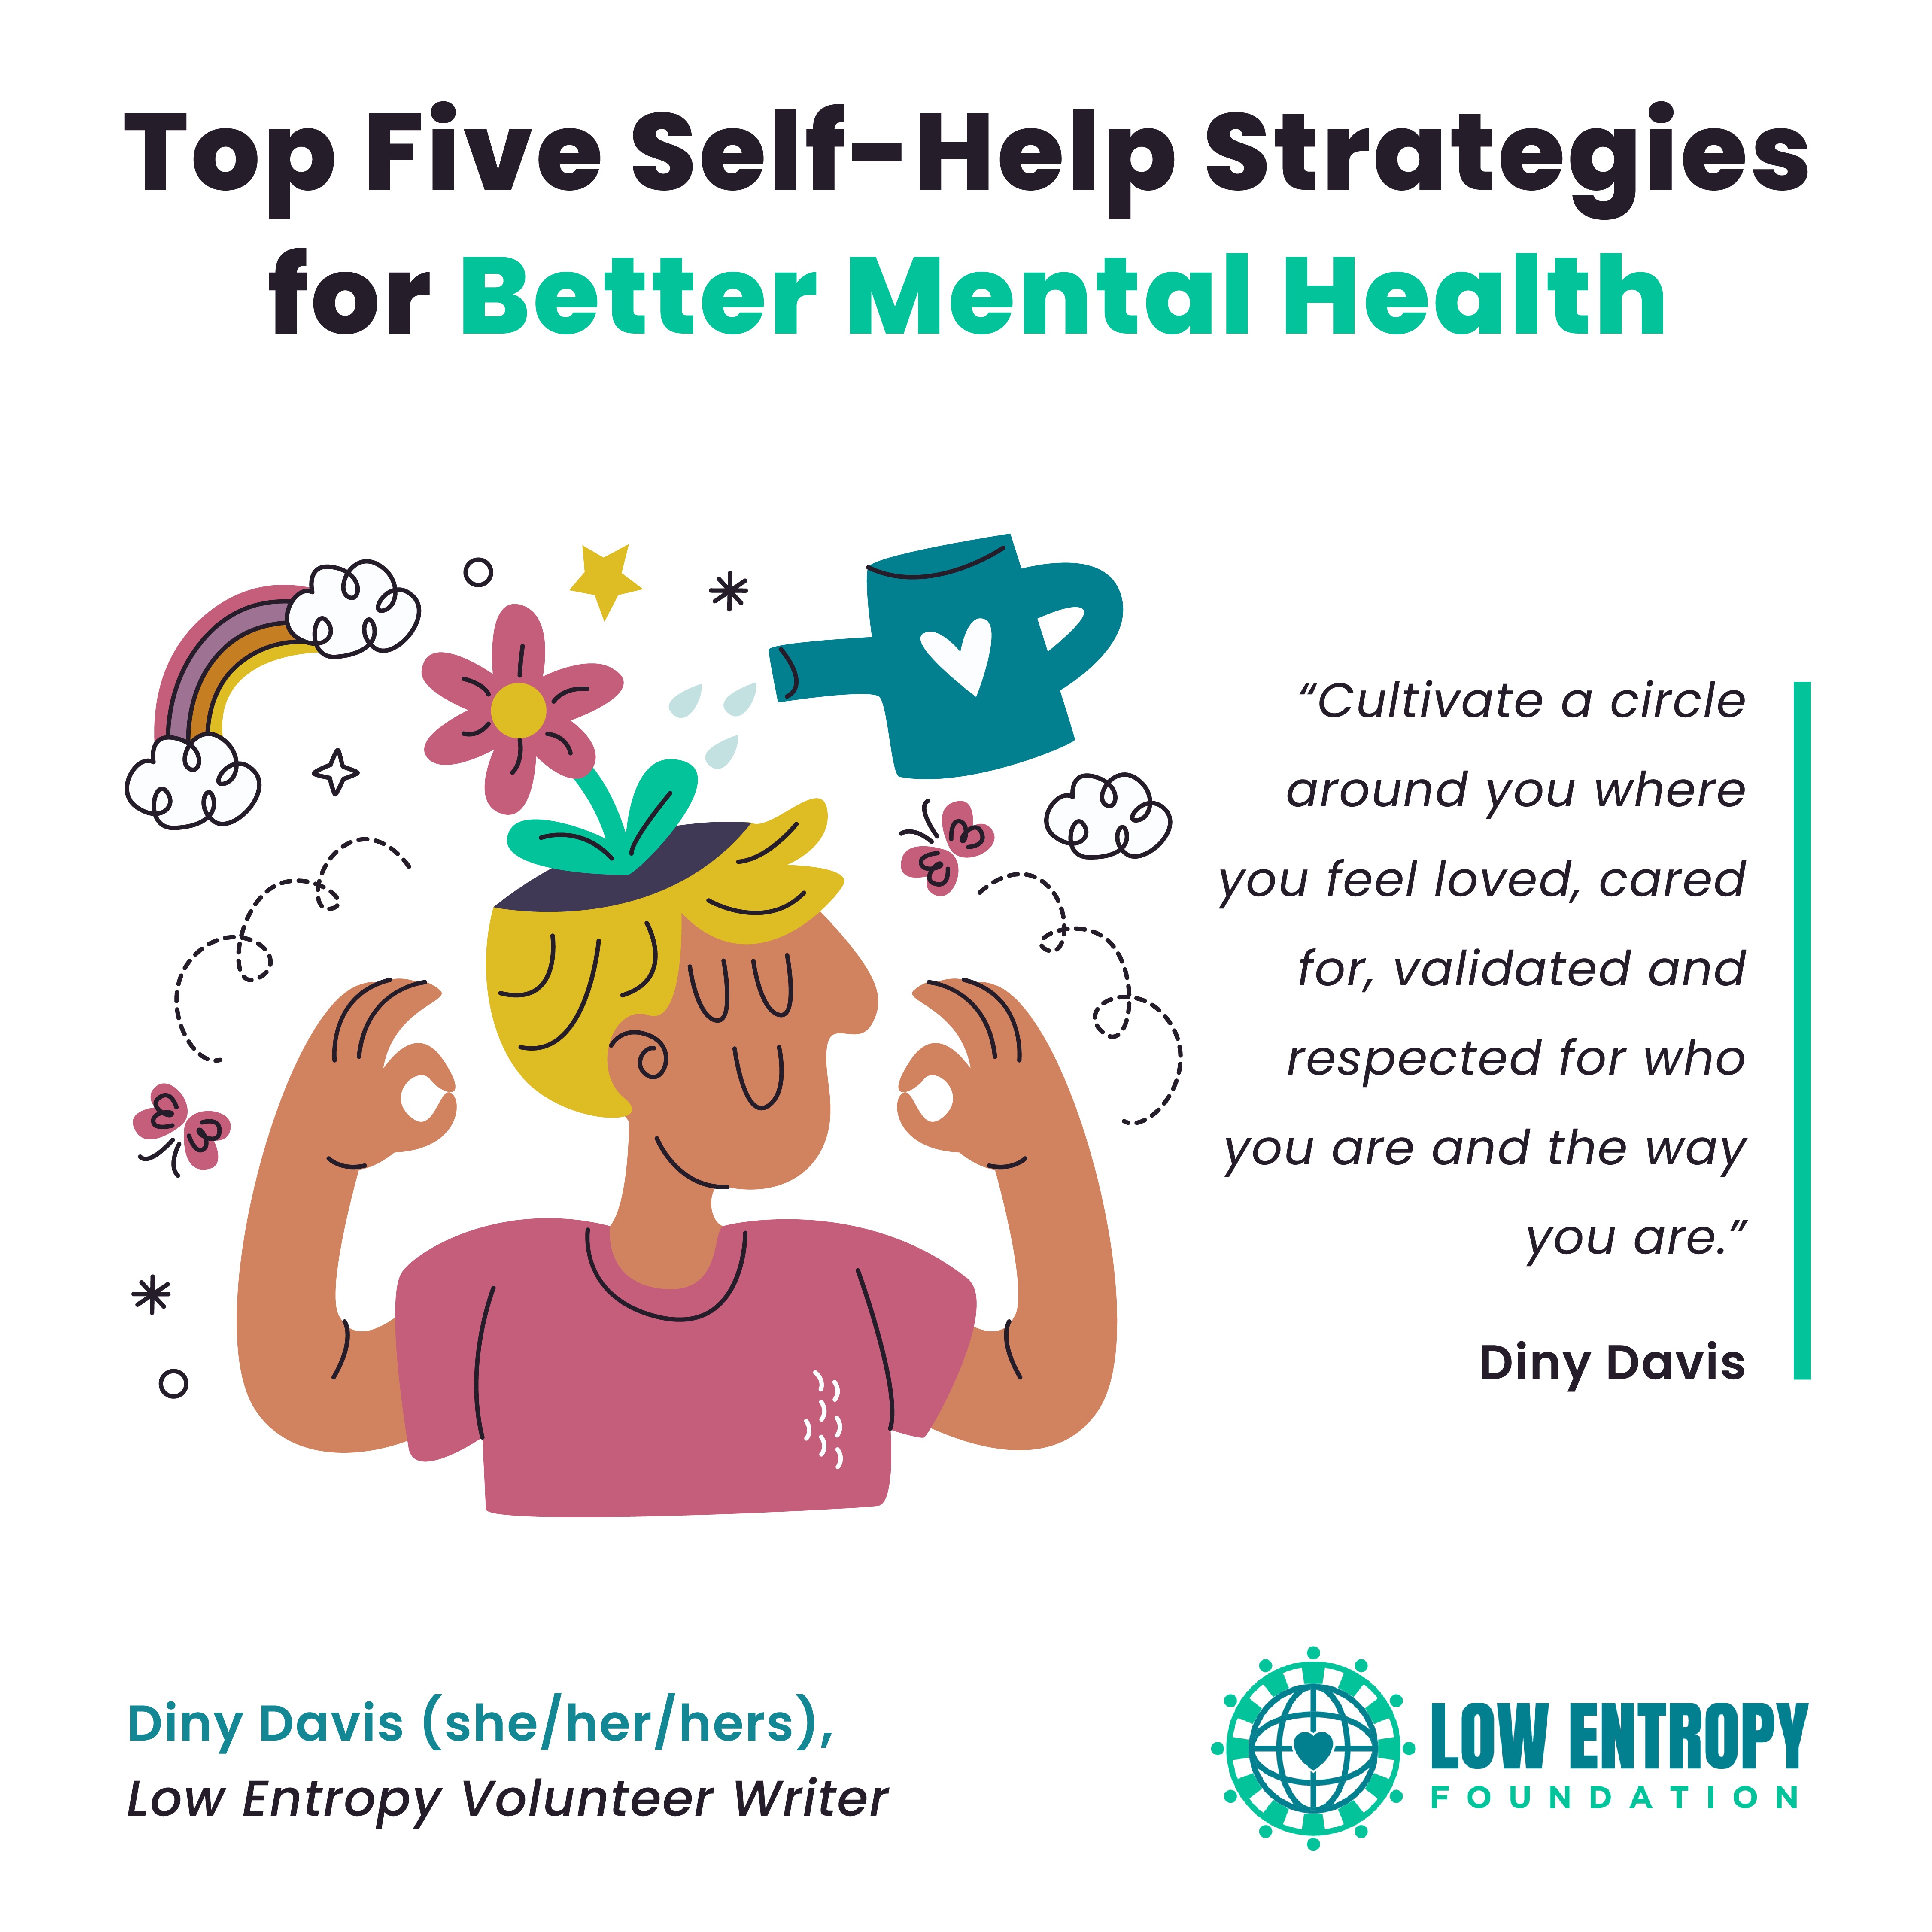 Top Five Self-Help Strategies for Better Mental Health